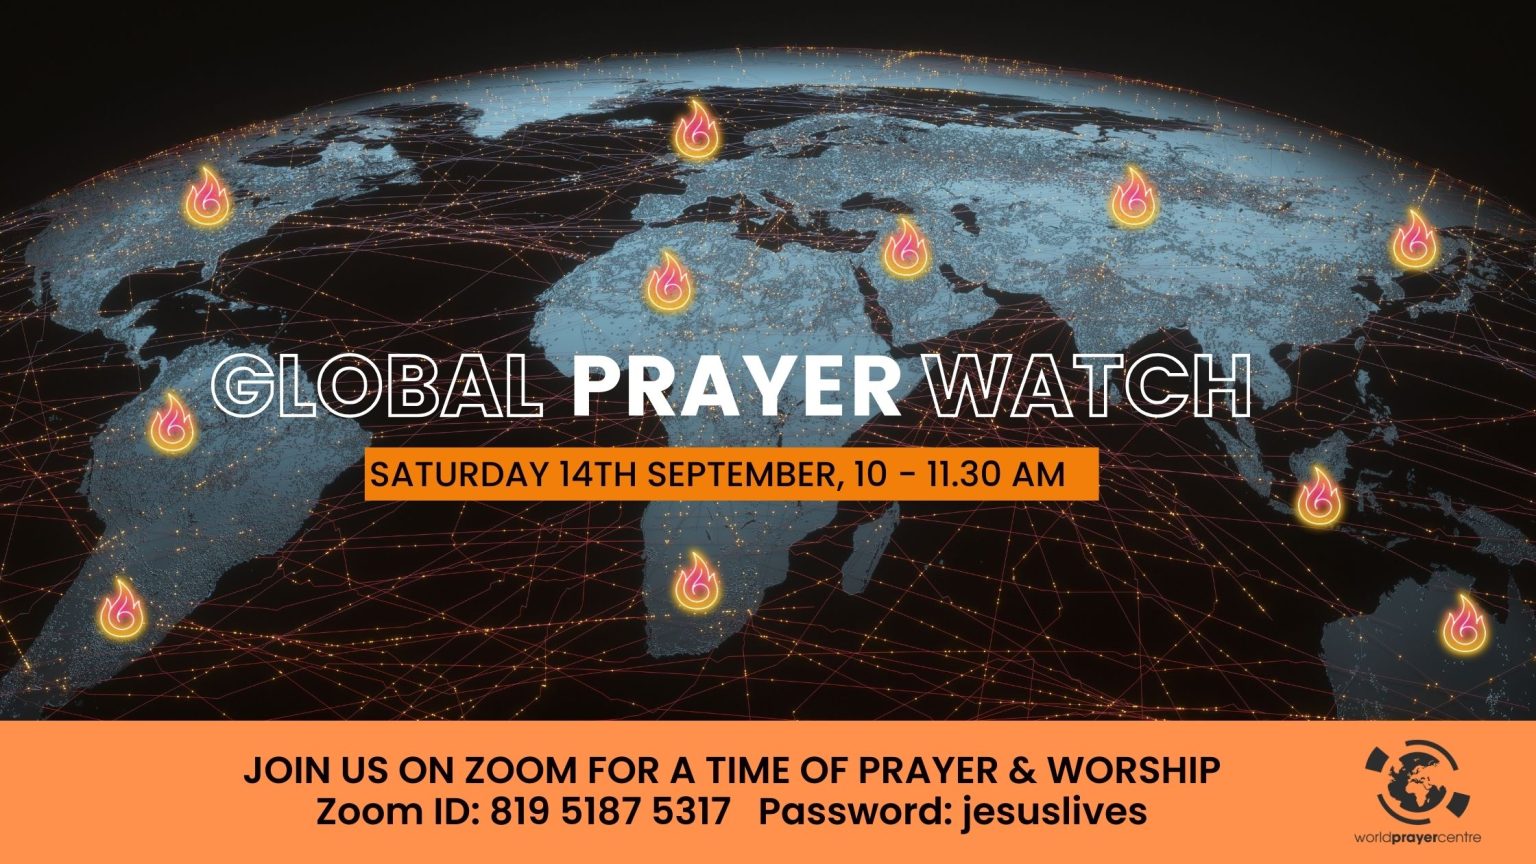 Global prayer watch